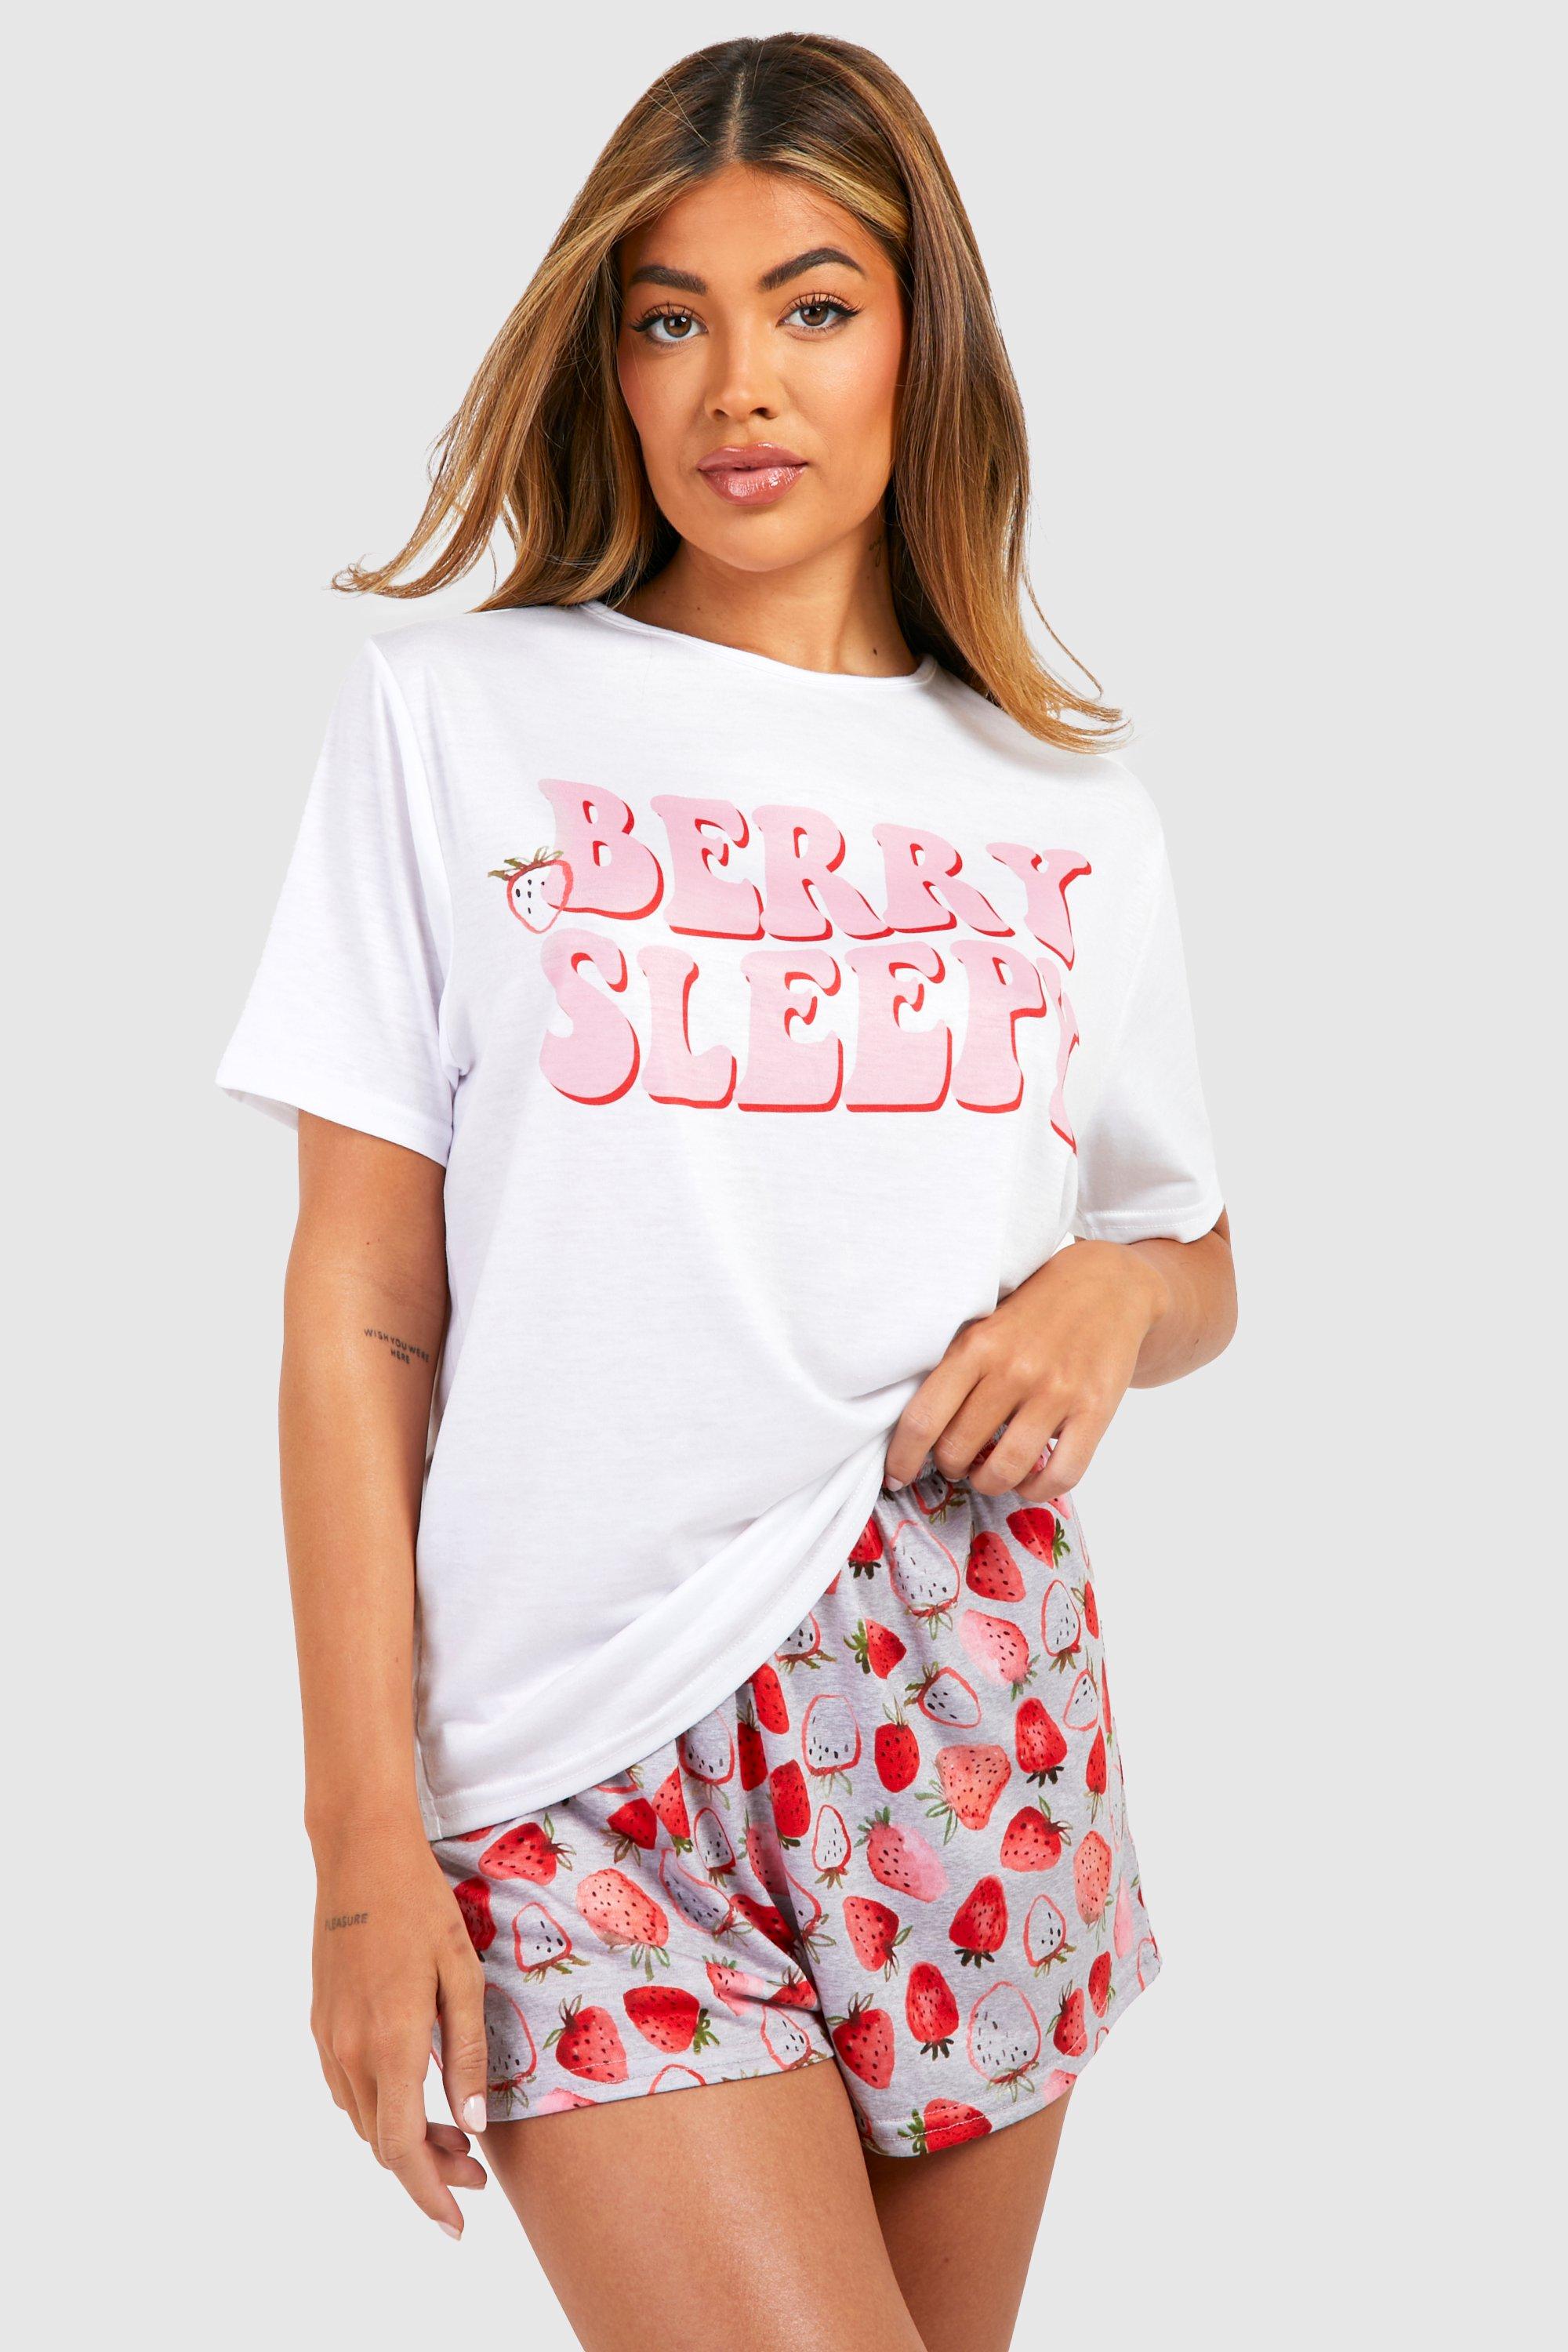 Berry Sleepy Jersey Pyjama Short Set